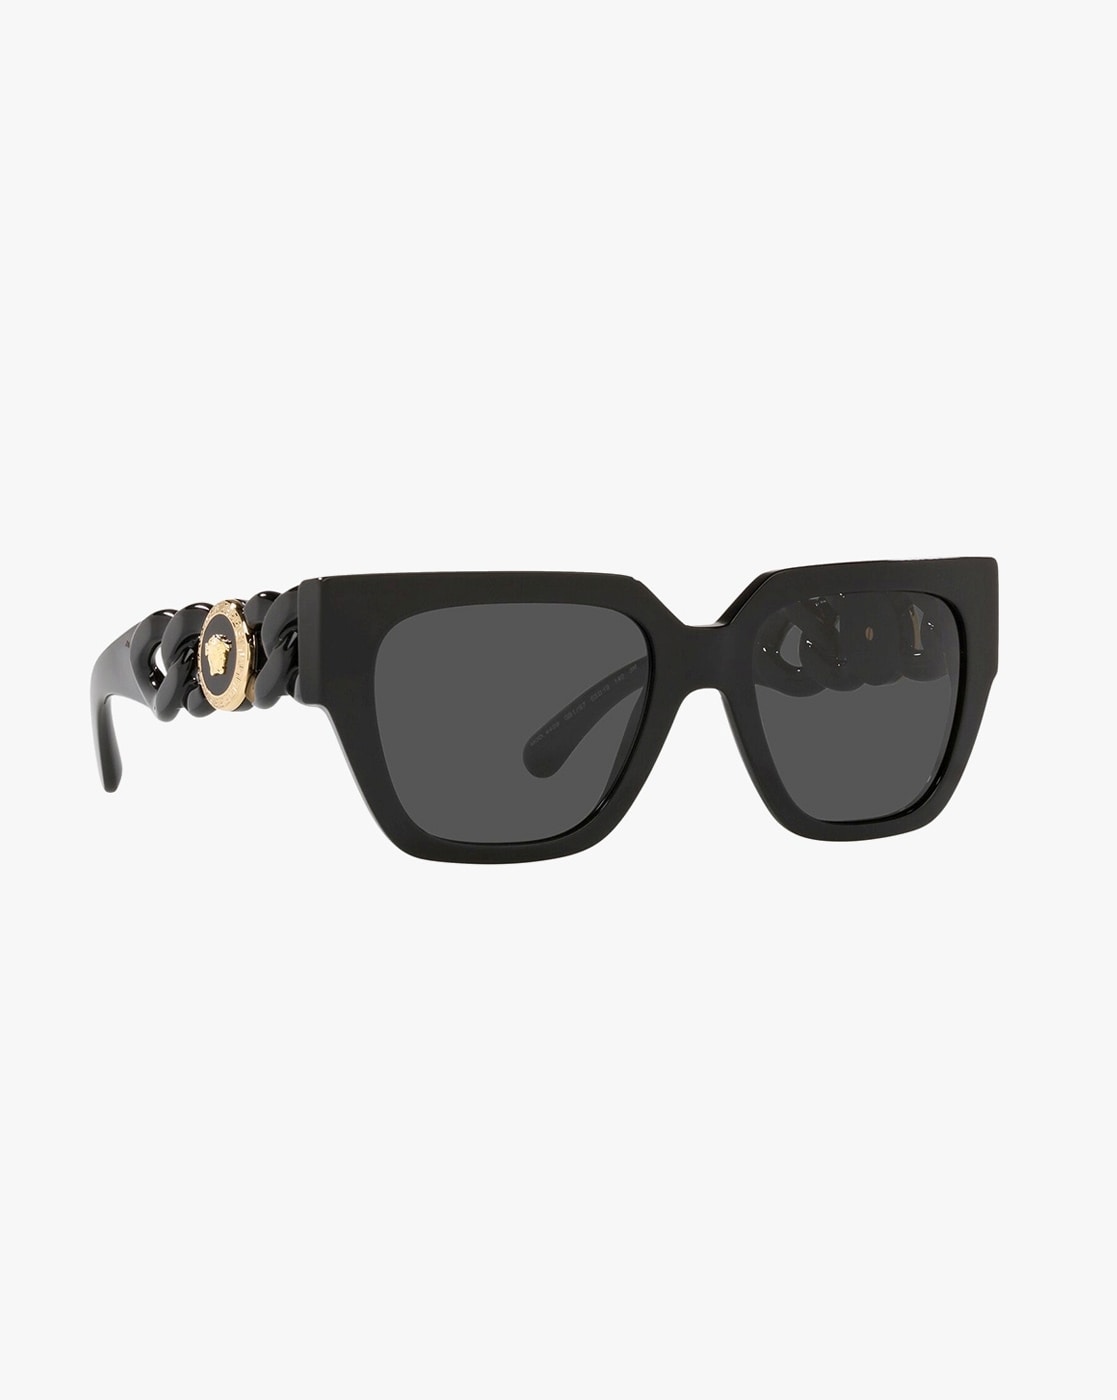 New VERSACE VE2248 100287 Gold/Dark Grey Lenses 58mm Authentic Sunglasses |  eBay